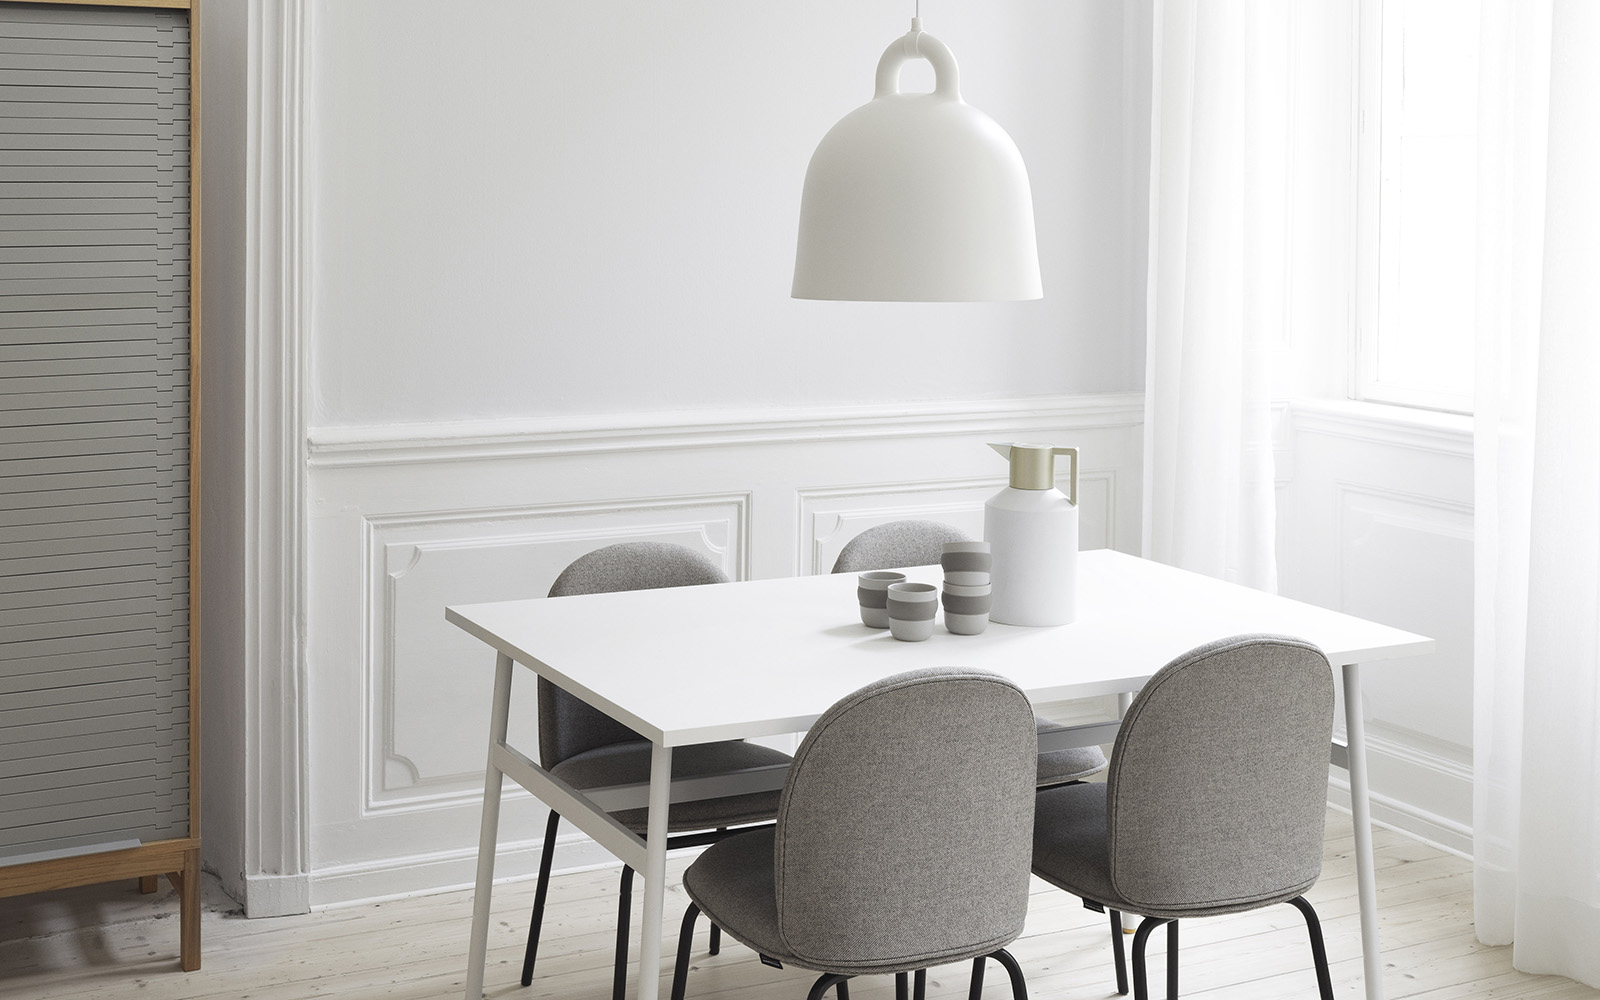 Bell Lamp medium | A minimalistic ceiling lamp in matte grey